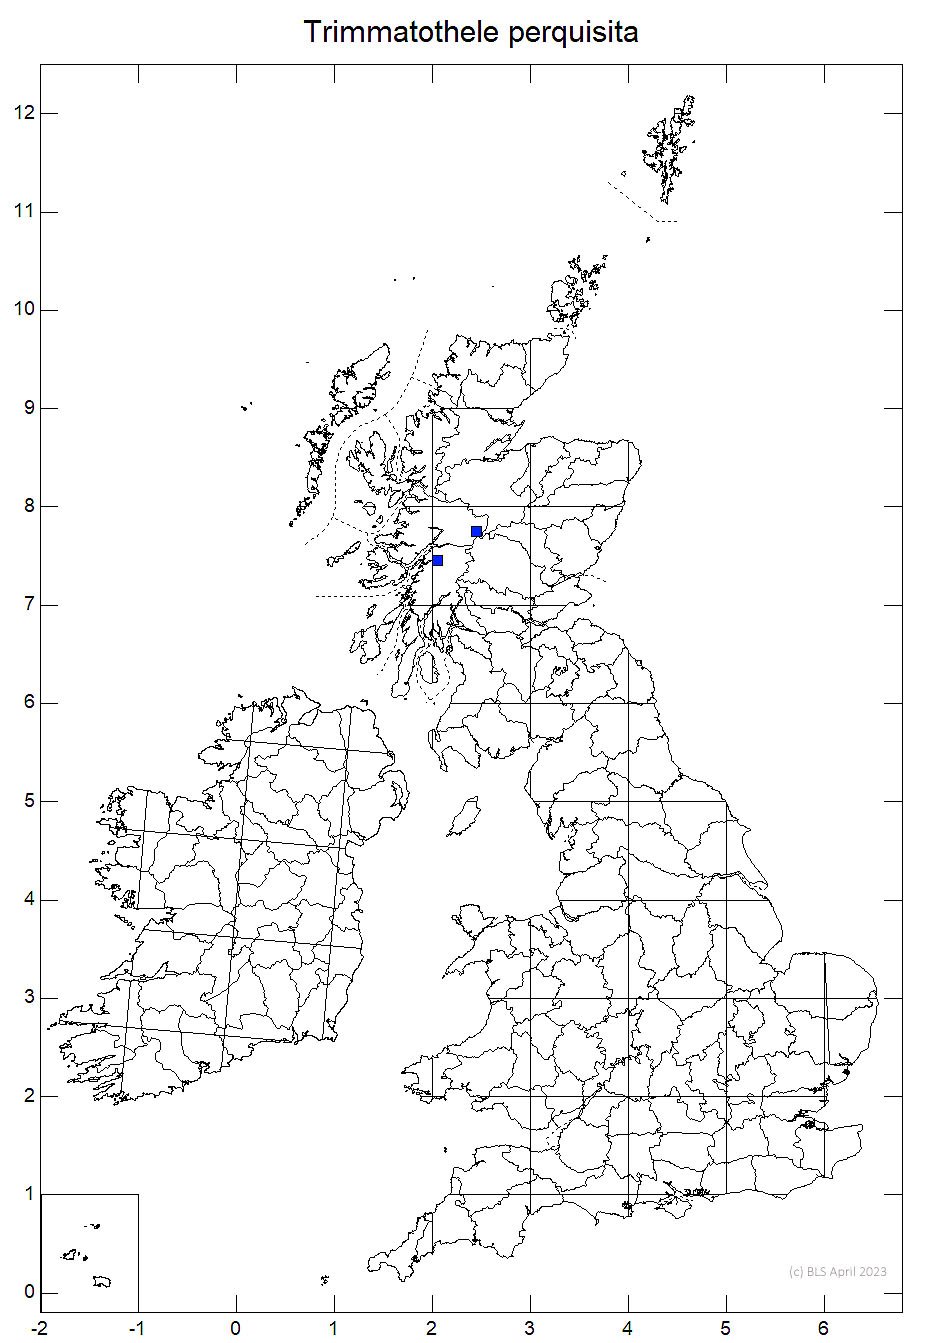 Trimmatothele perquisita 10km sq distribution map